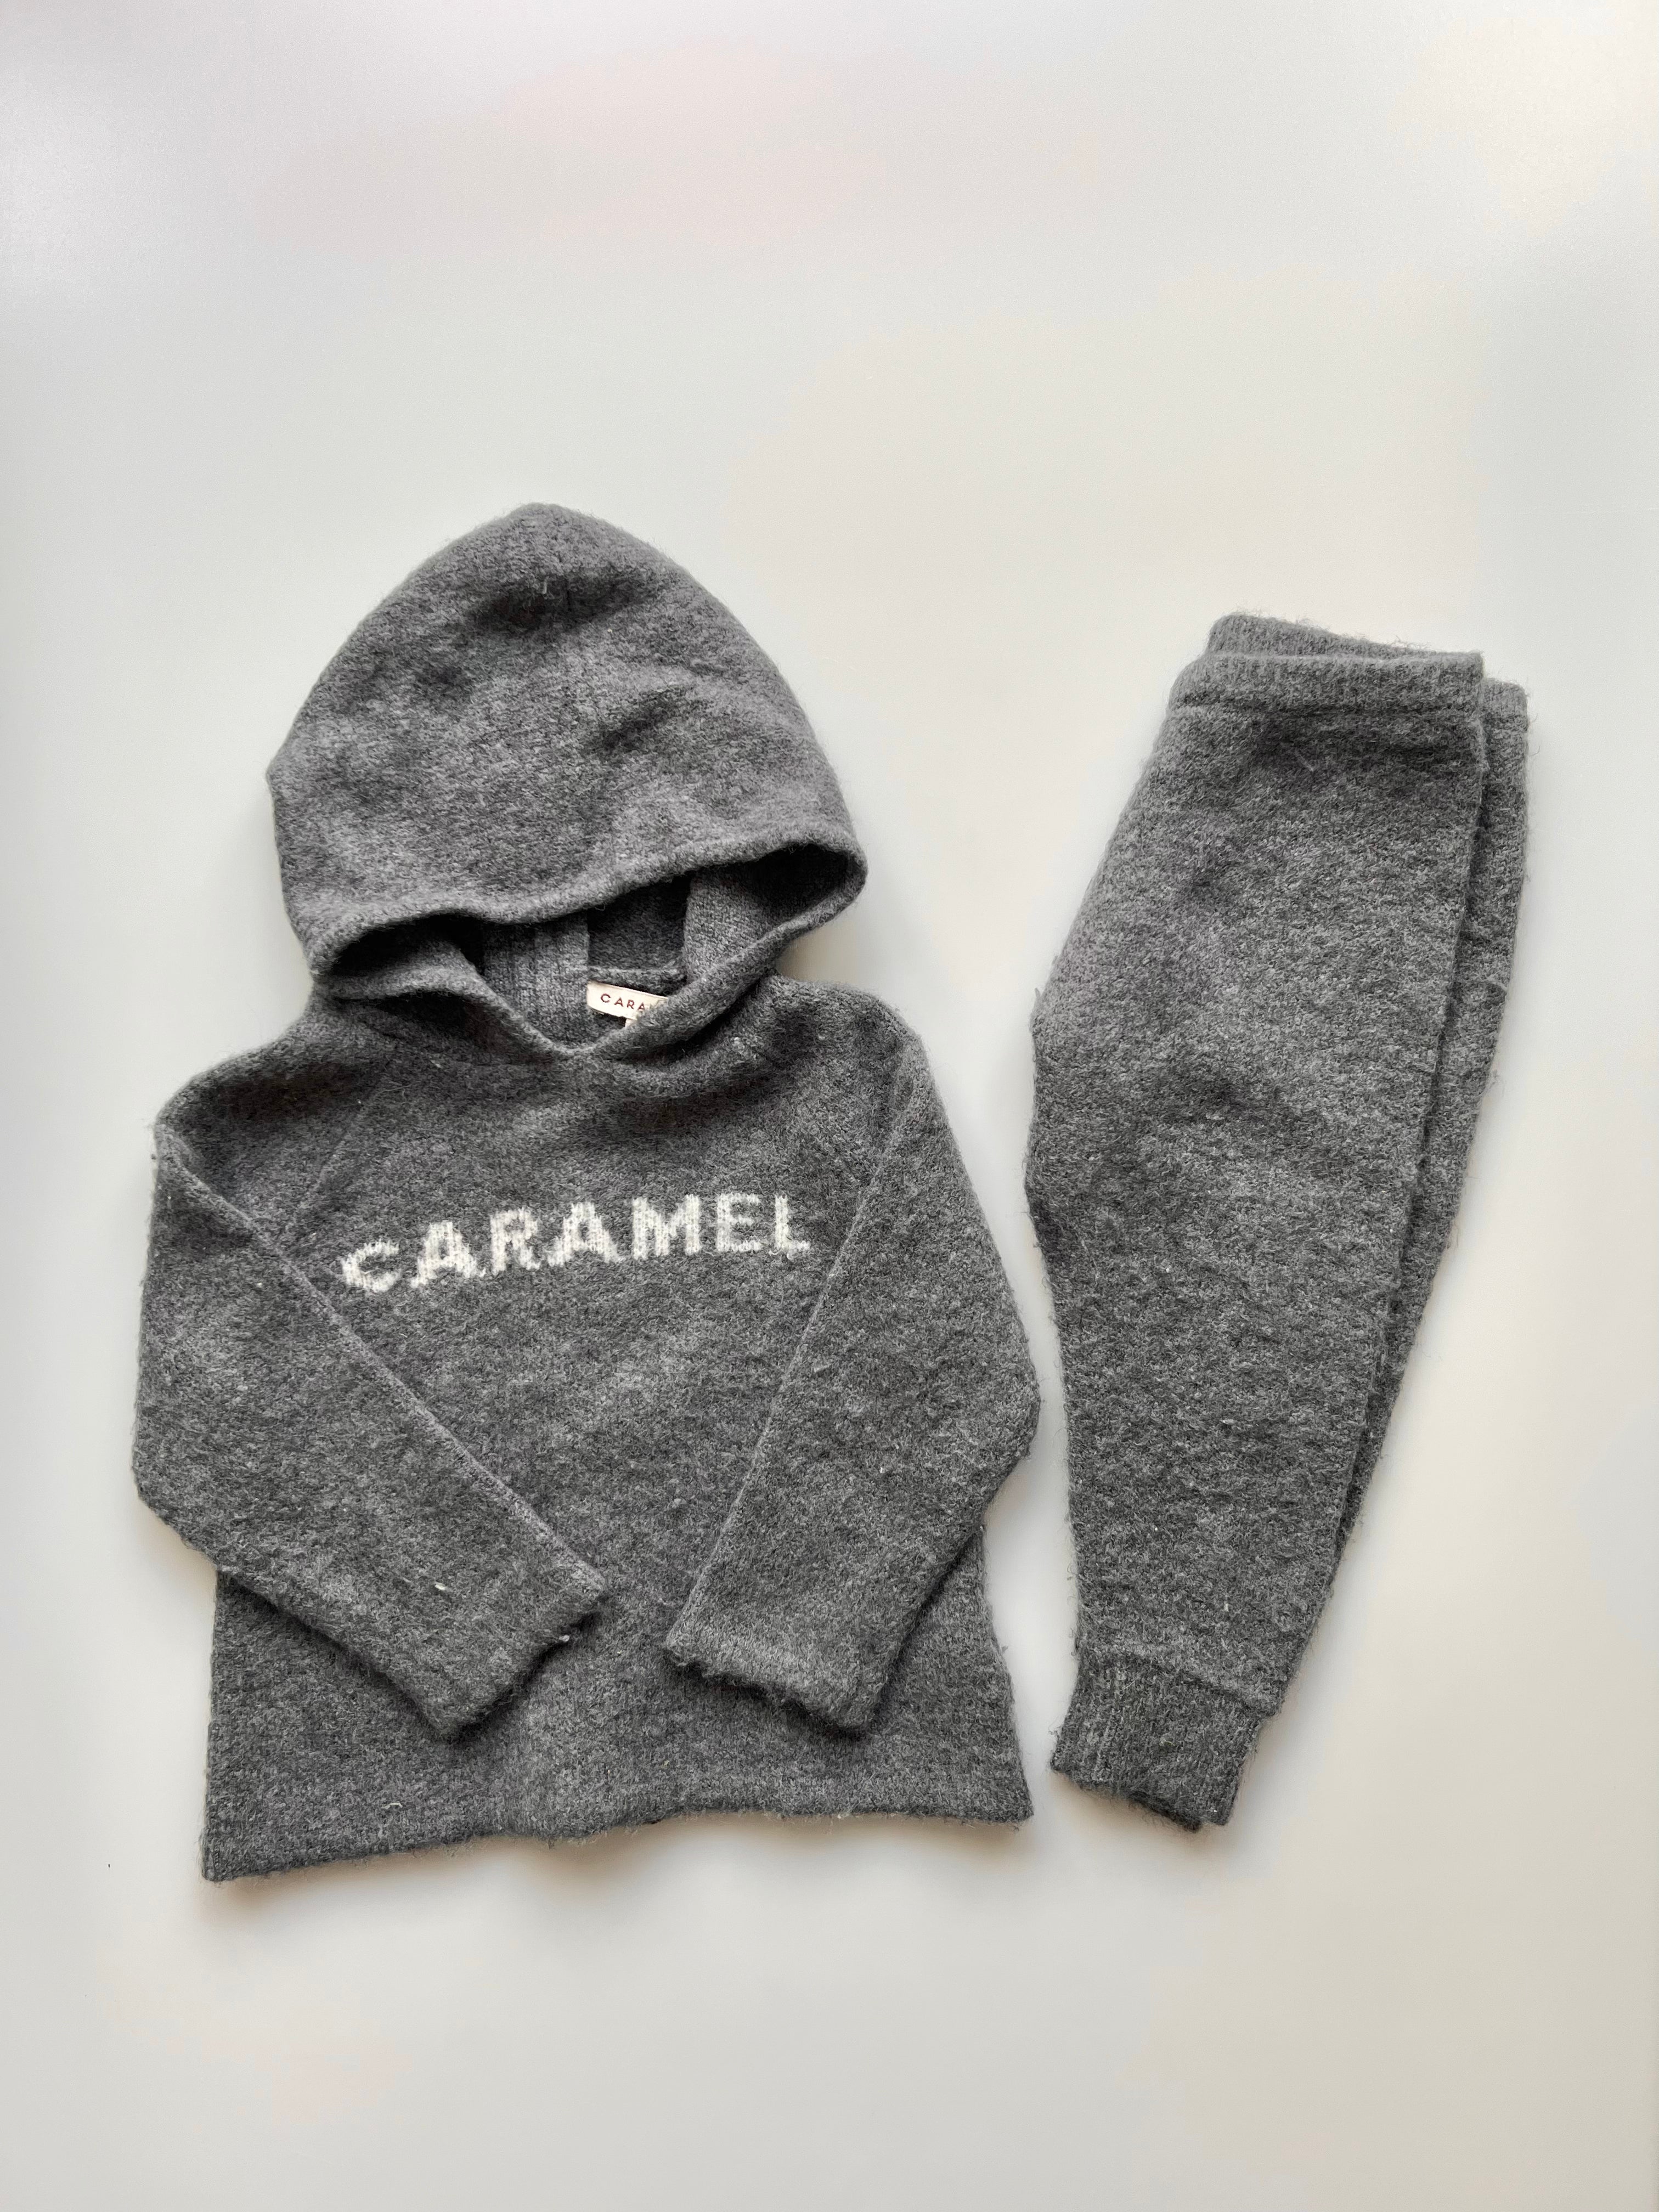 Caramel Baby Cashmere/Wool Mix Set 12-18 Months